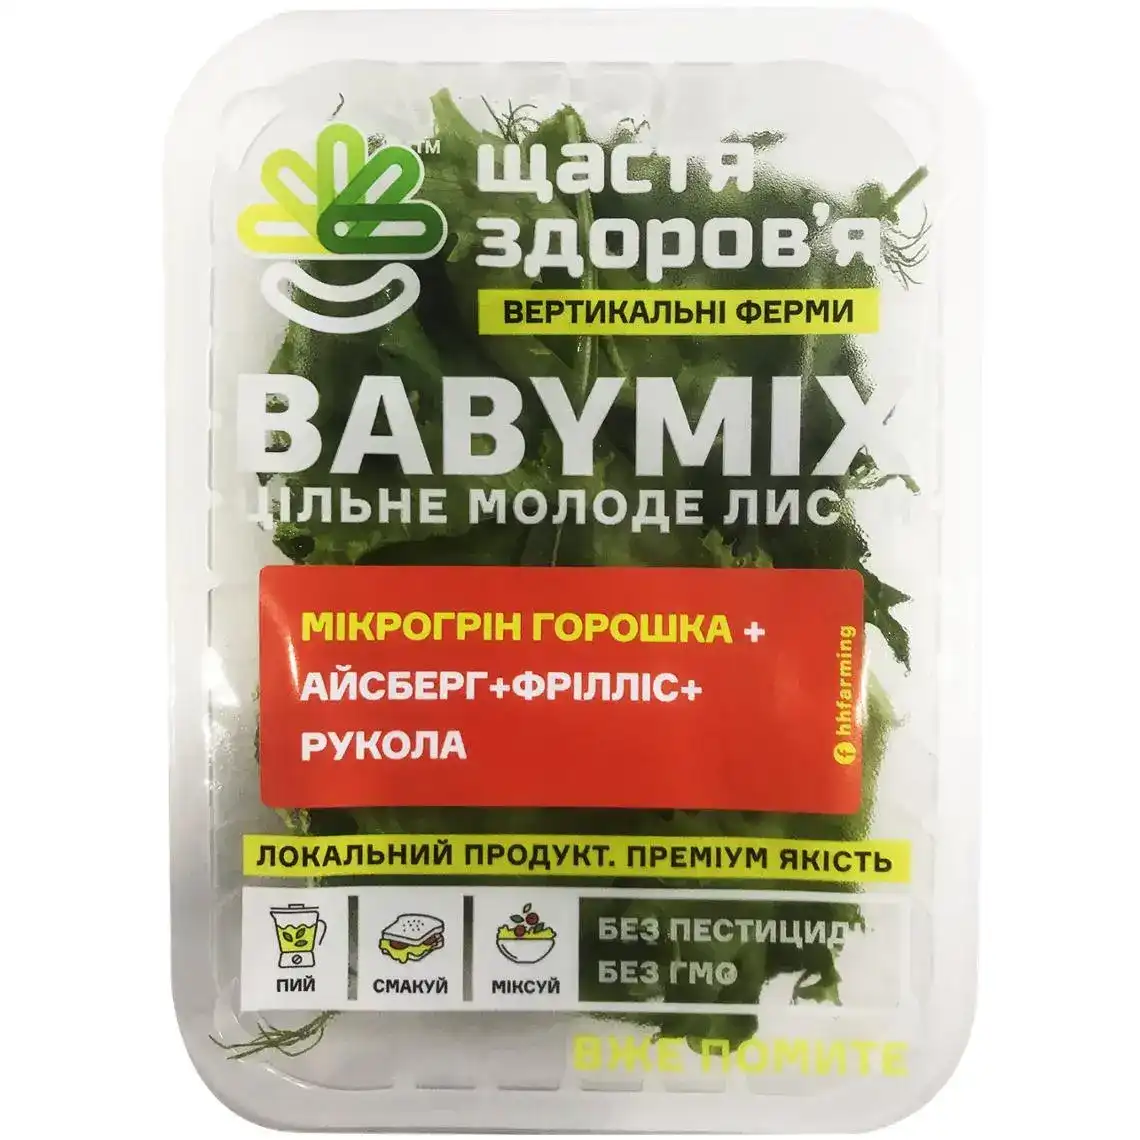 Салат Babymix + Мiкрогрiн горошку 70 г